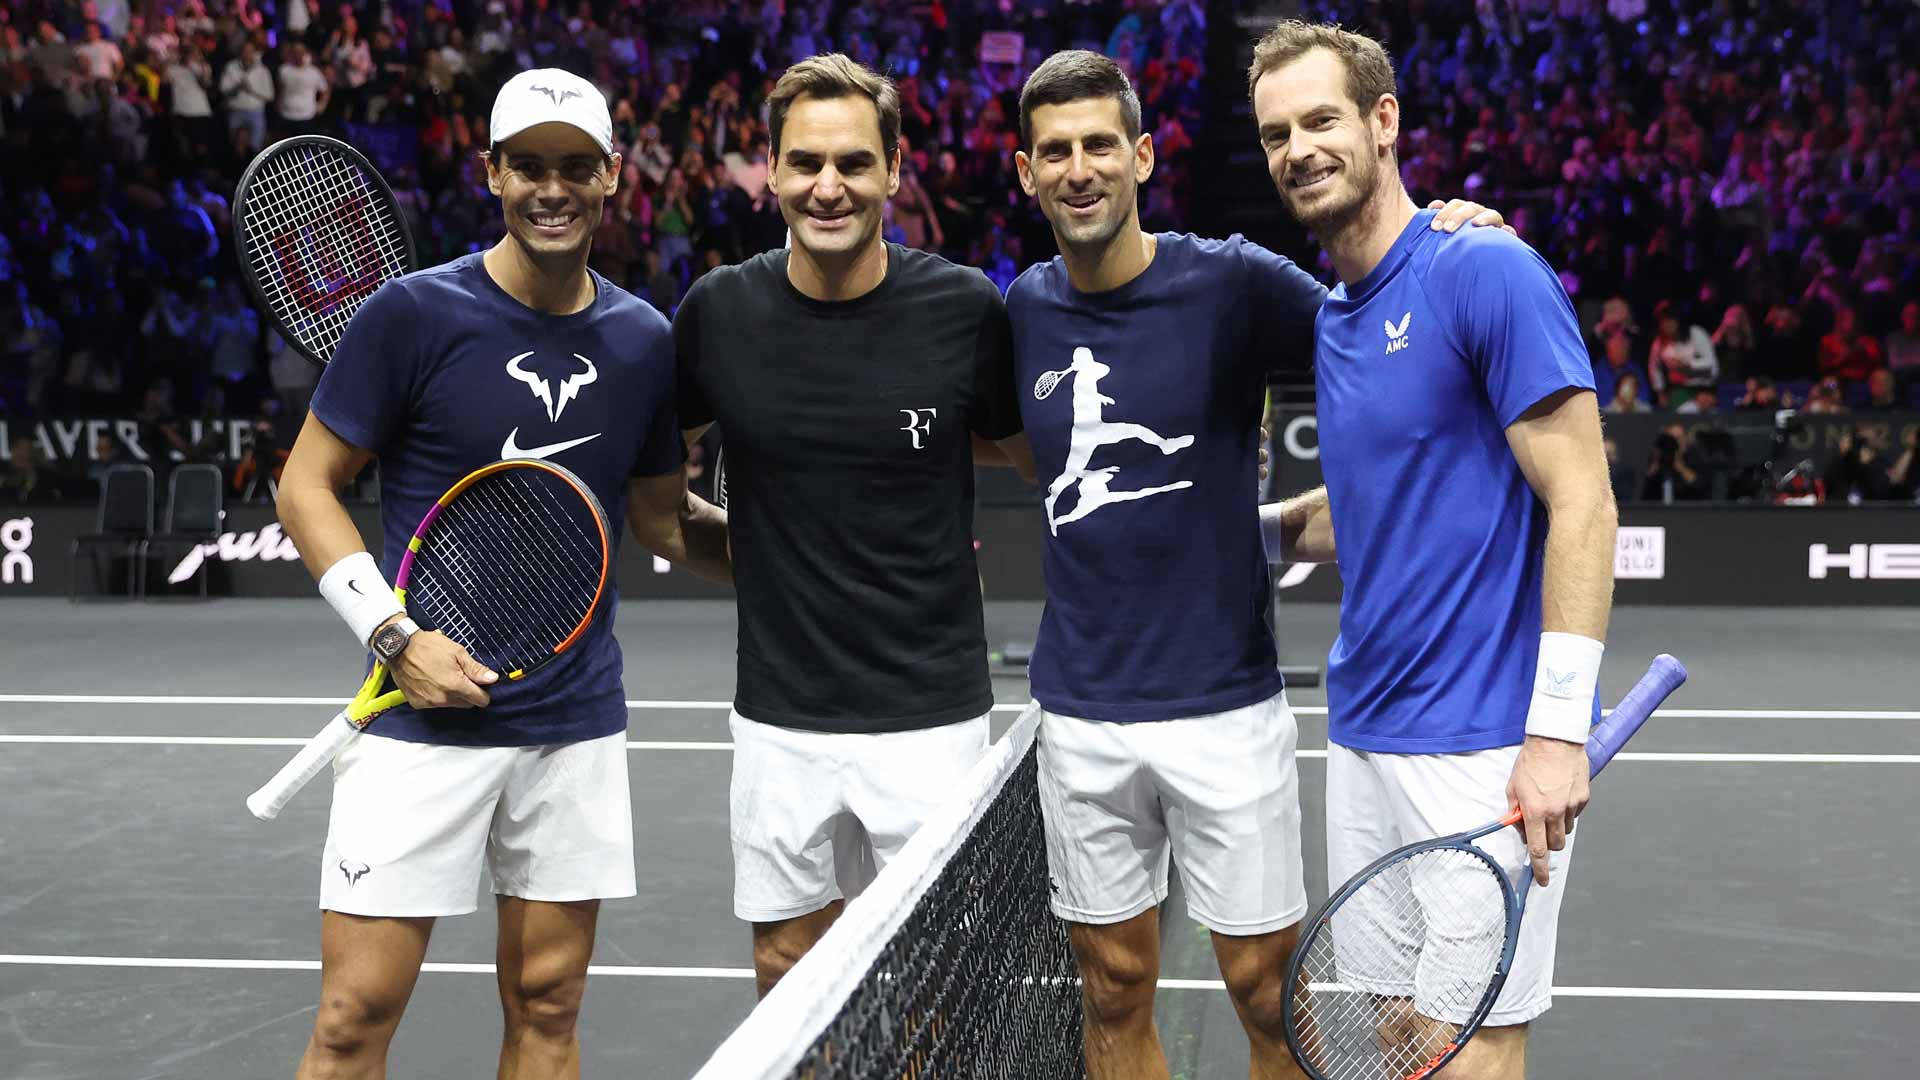 The Big Four Reunion: Federer, Nadal, Djokovic & Murray Take Laver Cup | ATP Tour